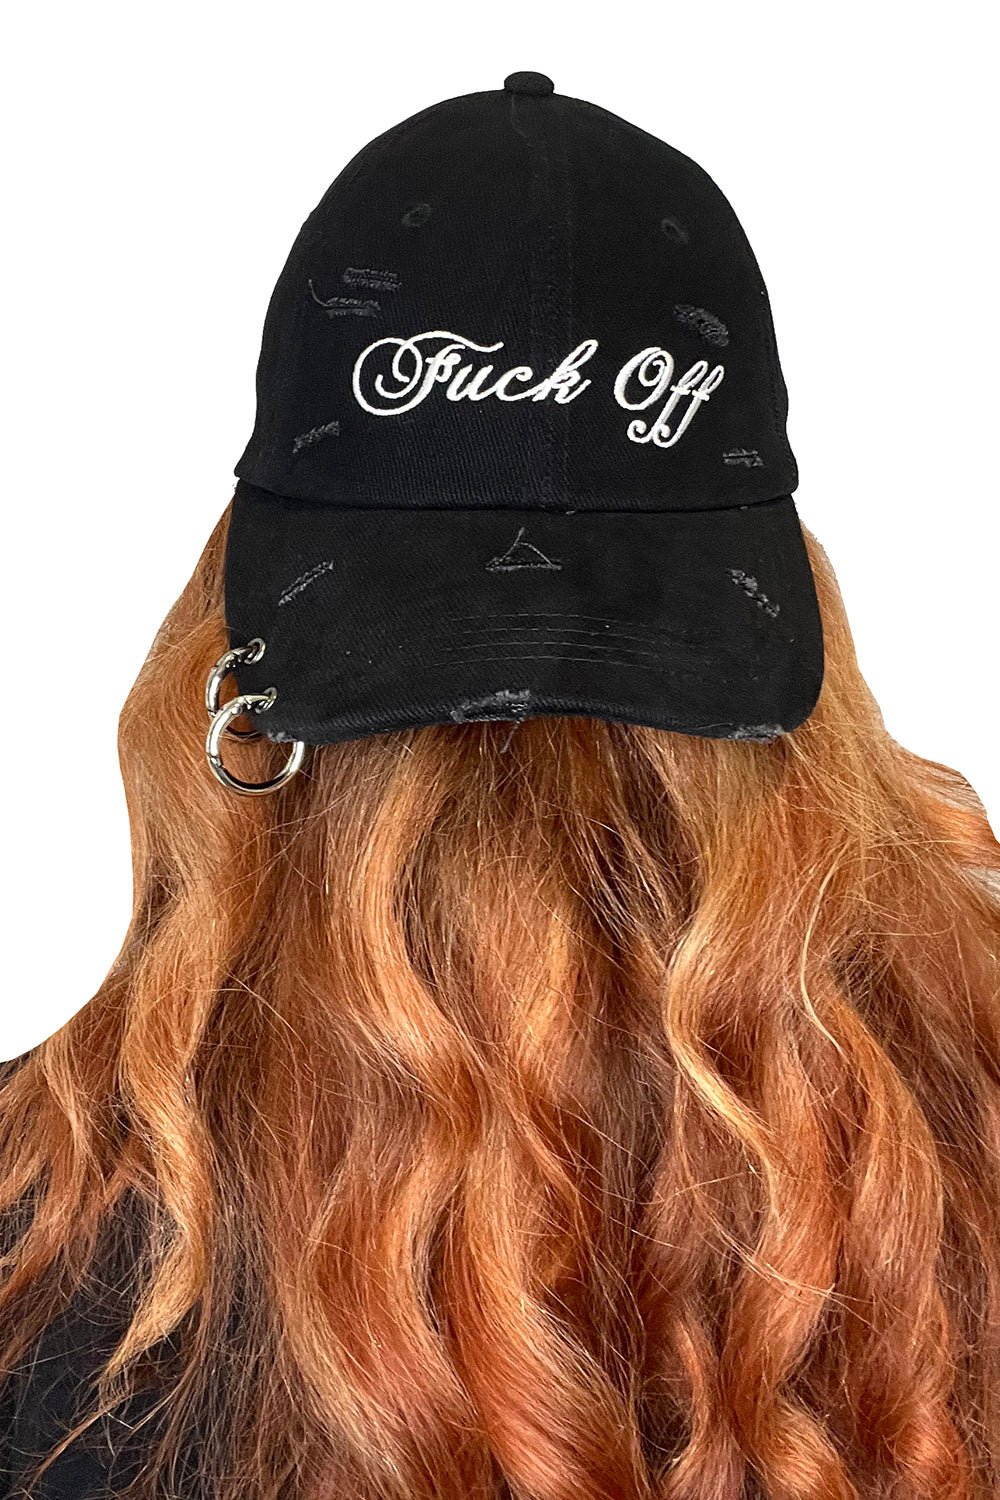 gothic swear word hat